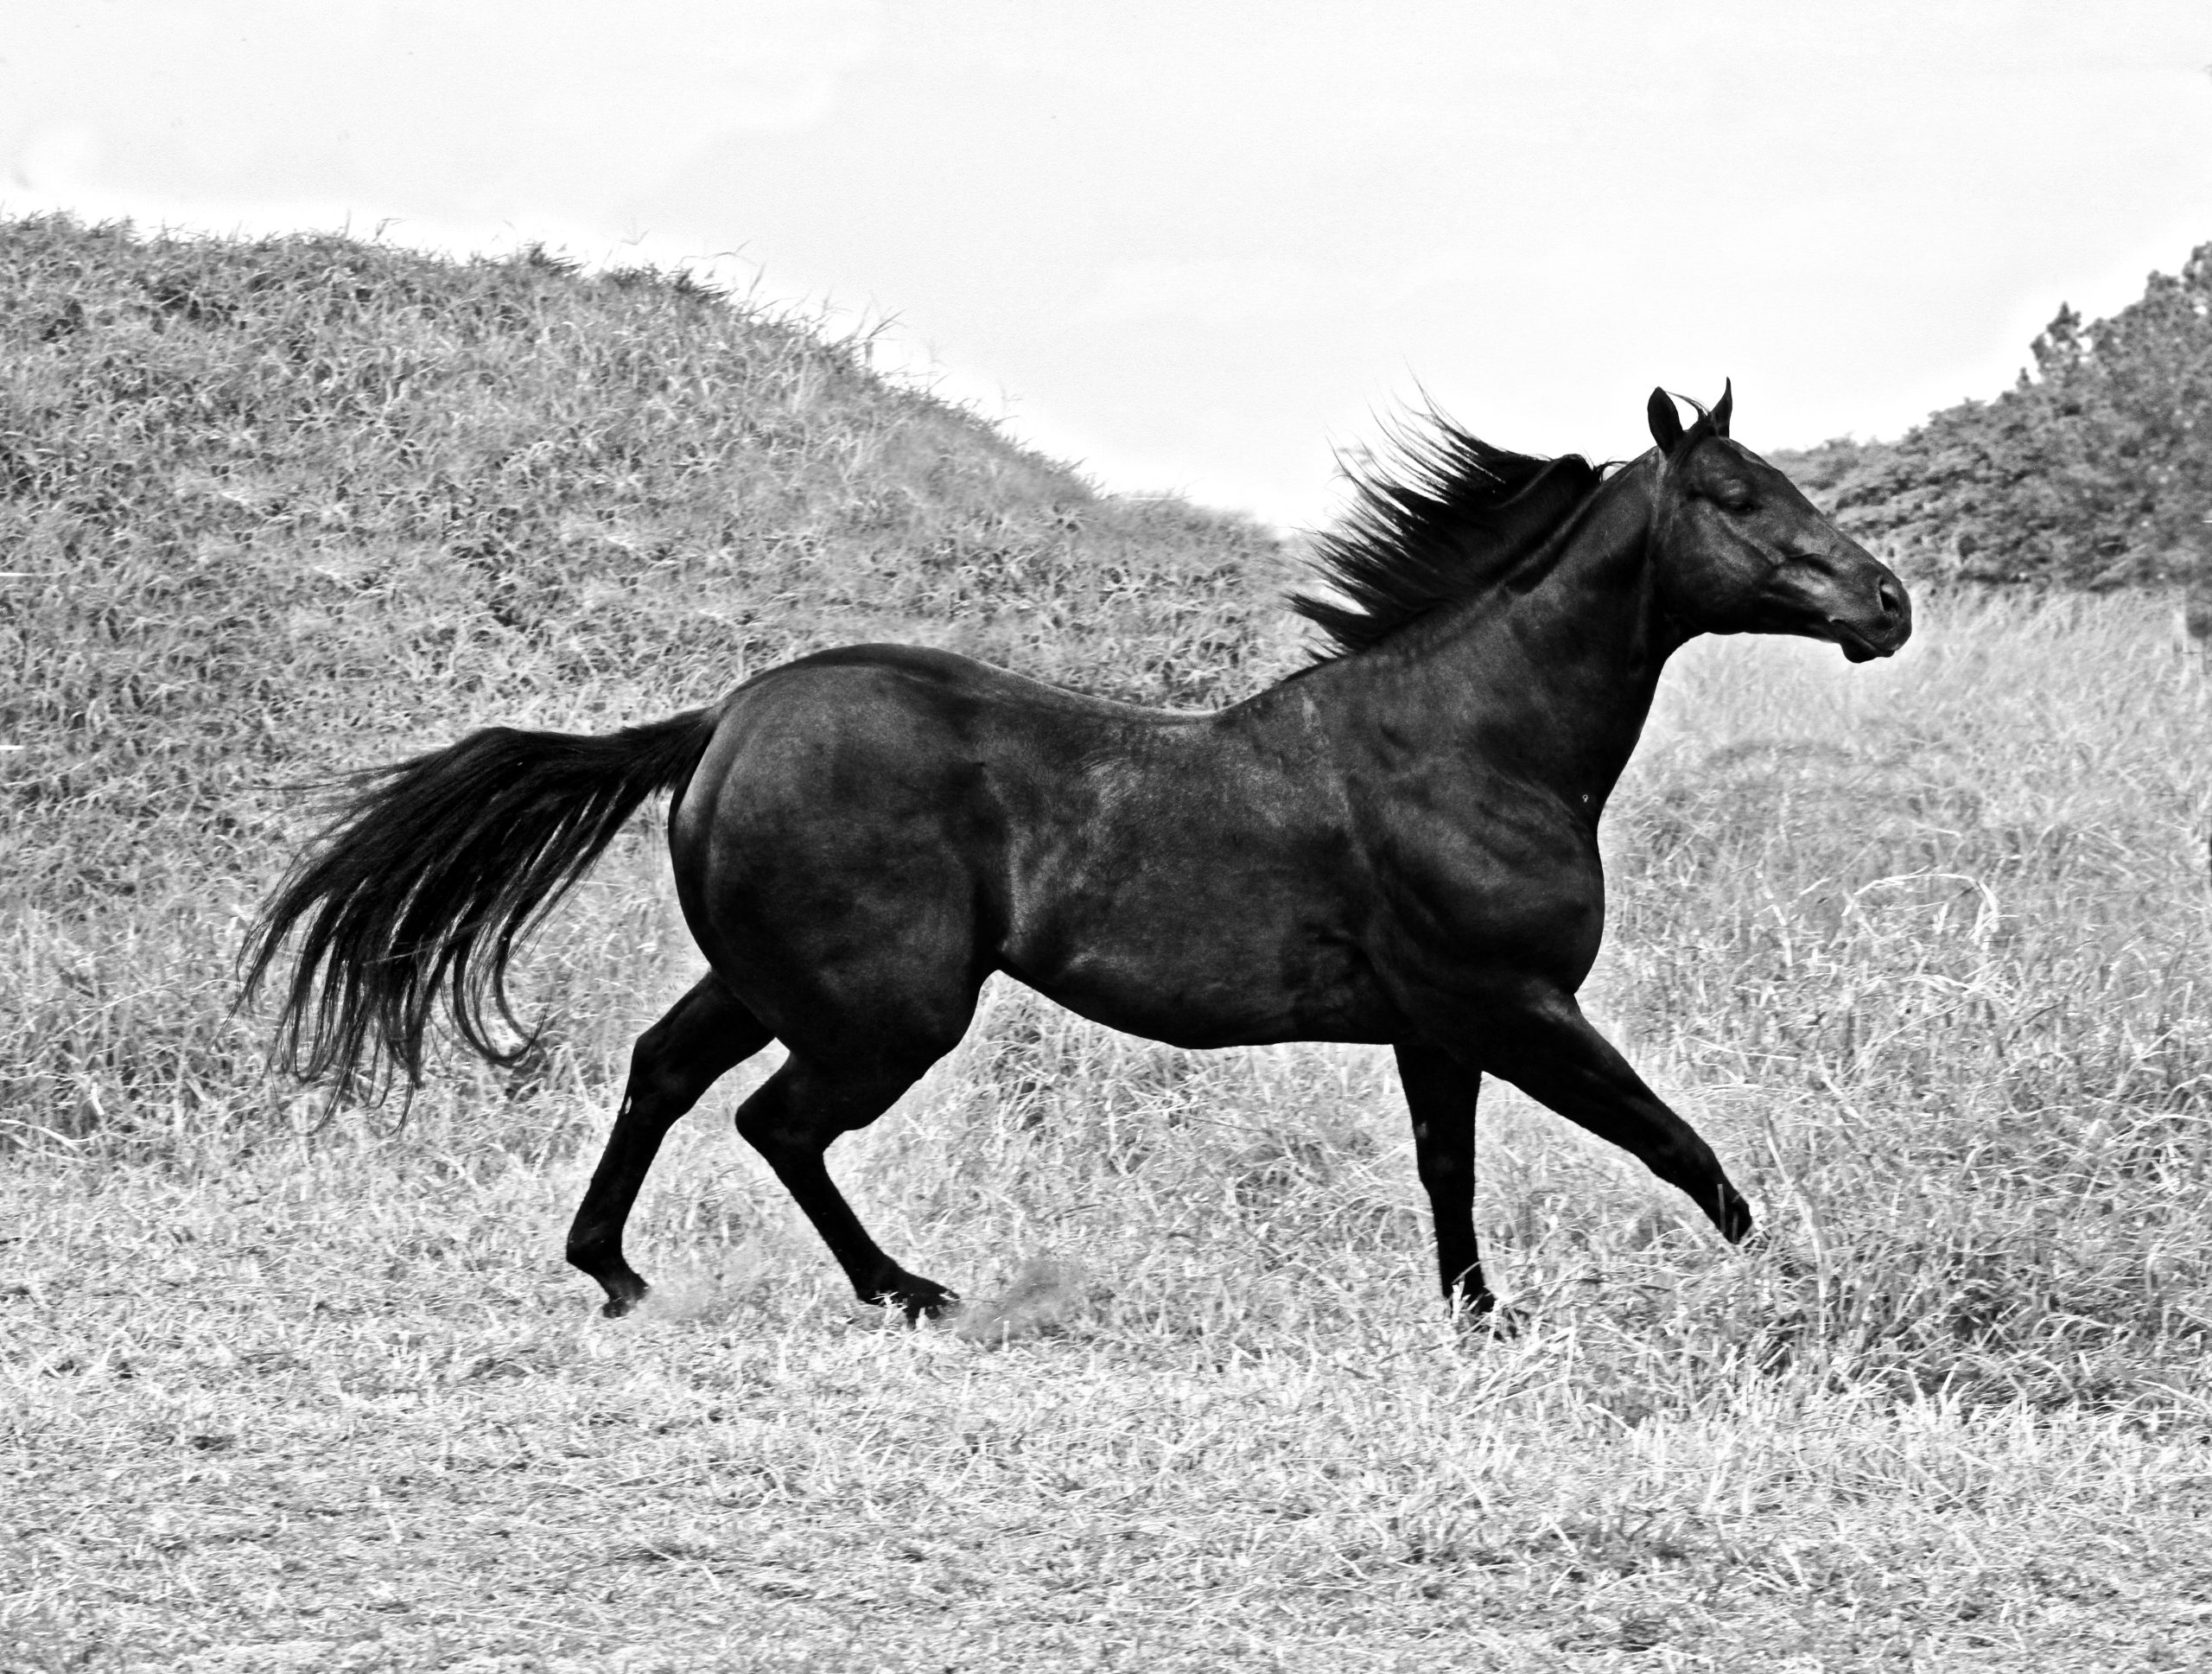 Cavalo, ser magnífico - Por Marcelo Pardini